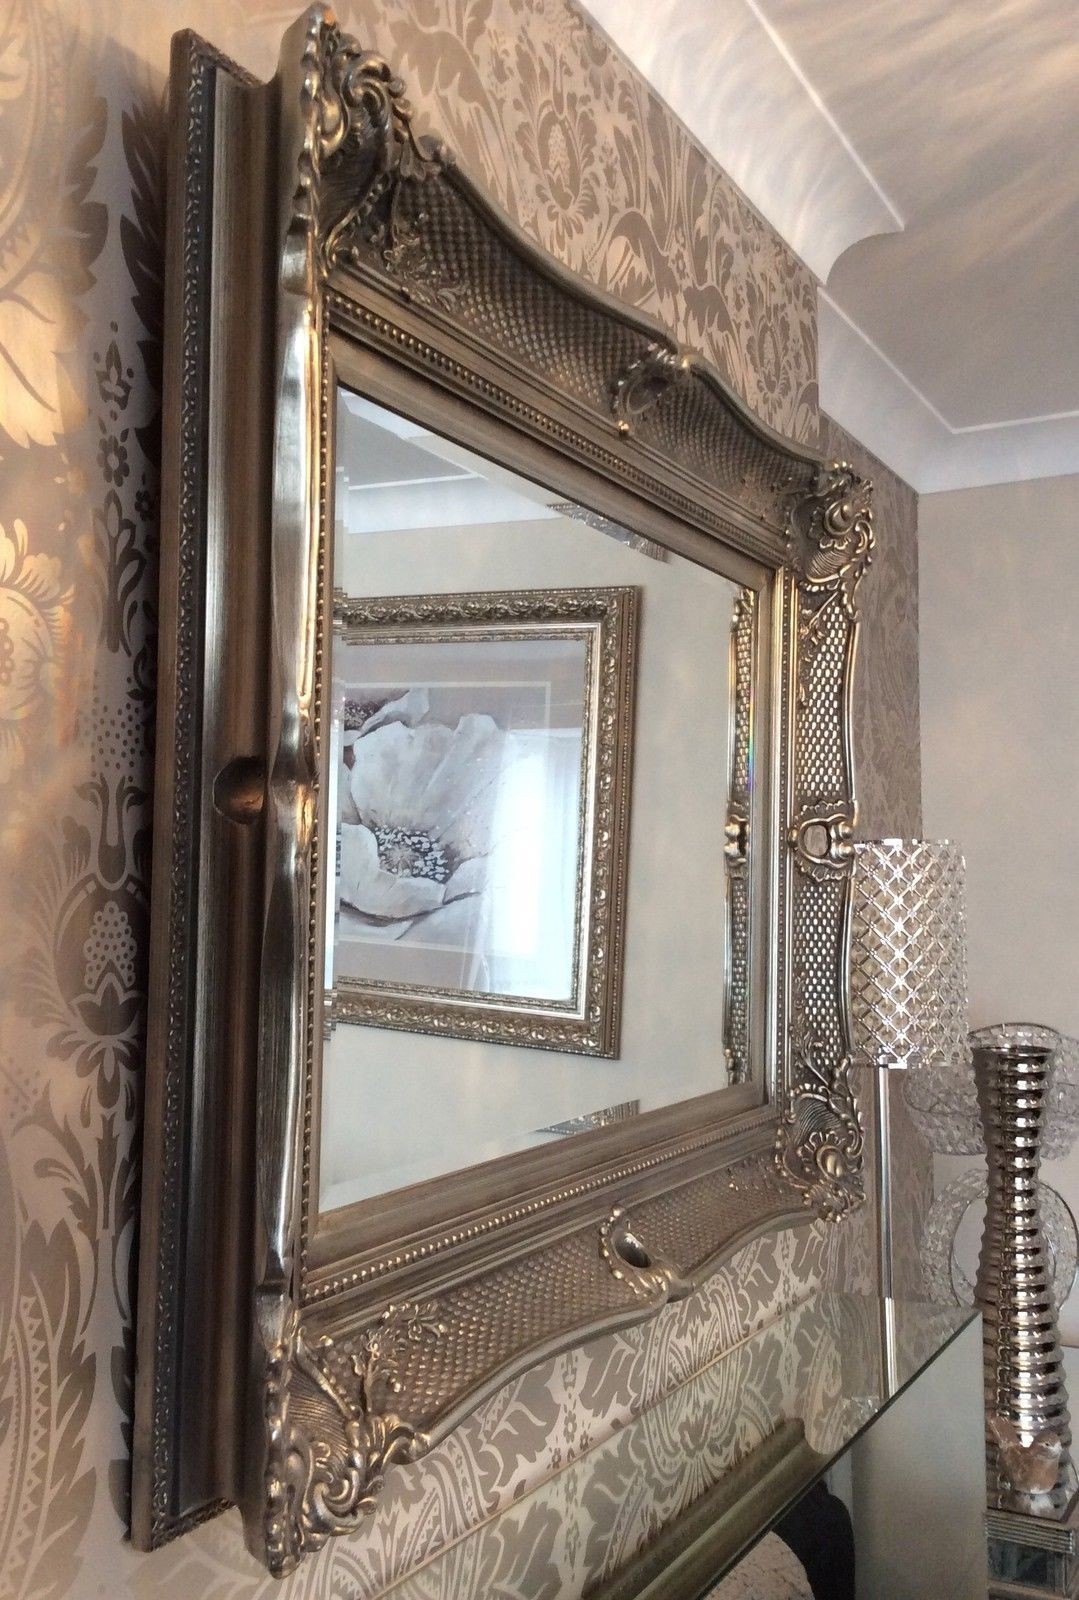 Wonderful ornate fabulous extra large wall mirror range